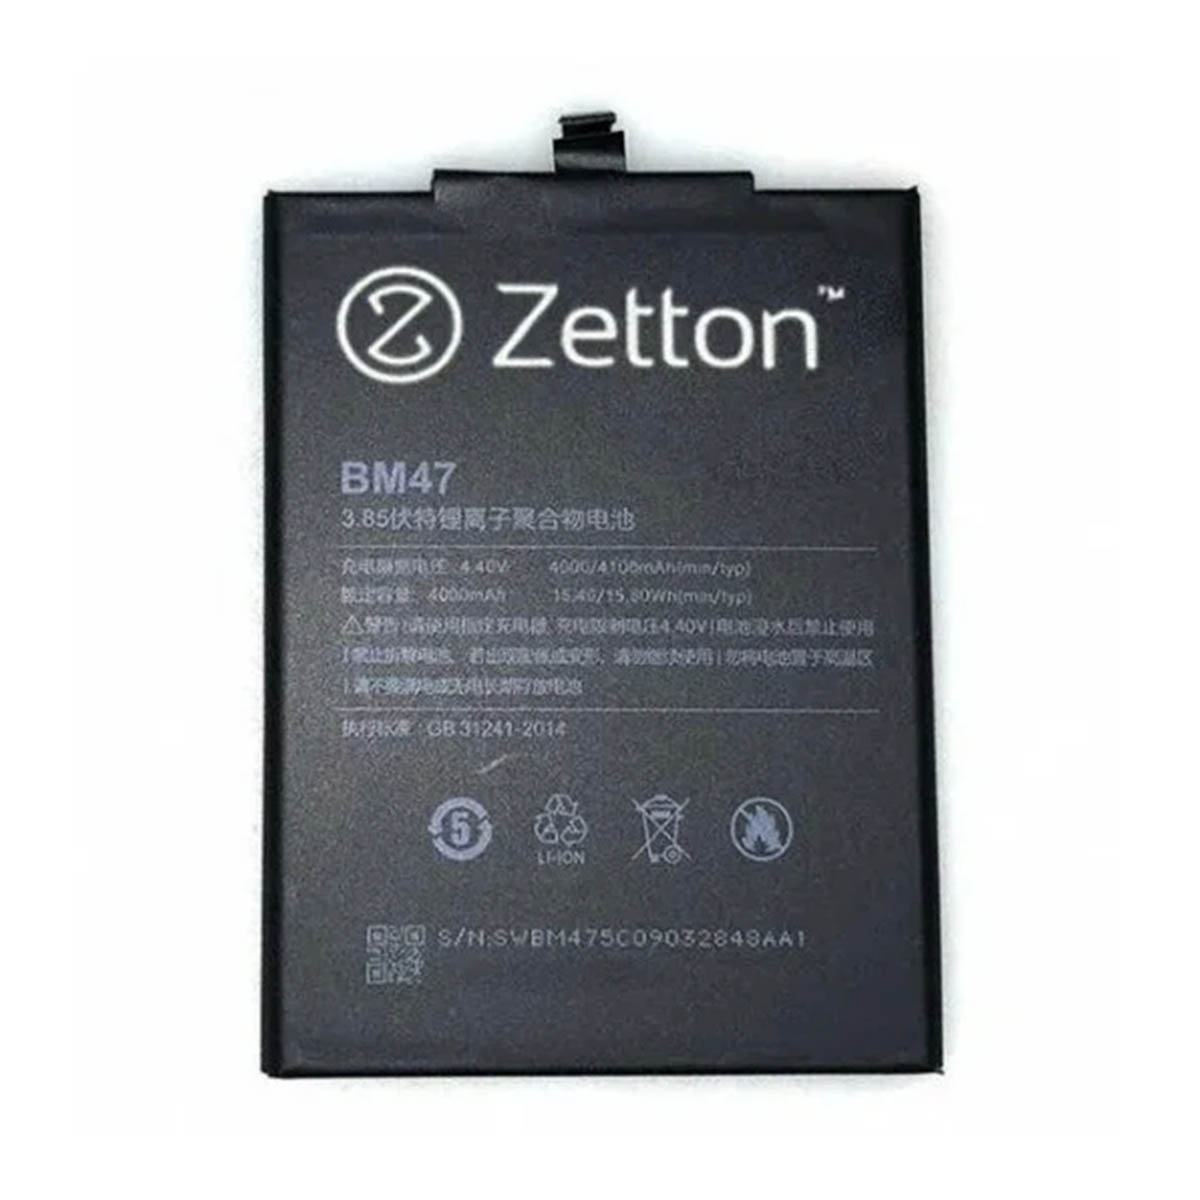 АКБ (Аккумулятор) Zetton BM47 для XIAOMI Redmi 3, Redmi 3S, Redmi 3 Pro, 3120 мАч.